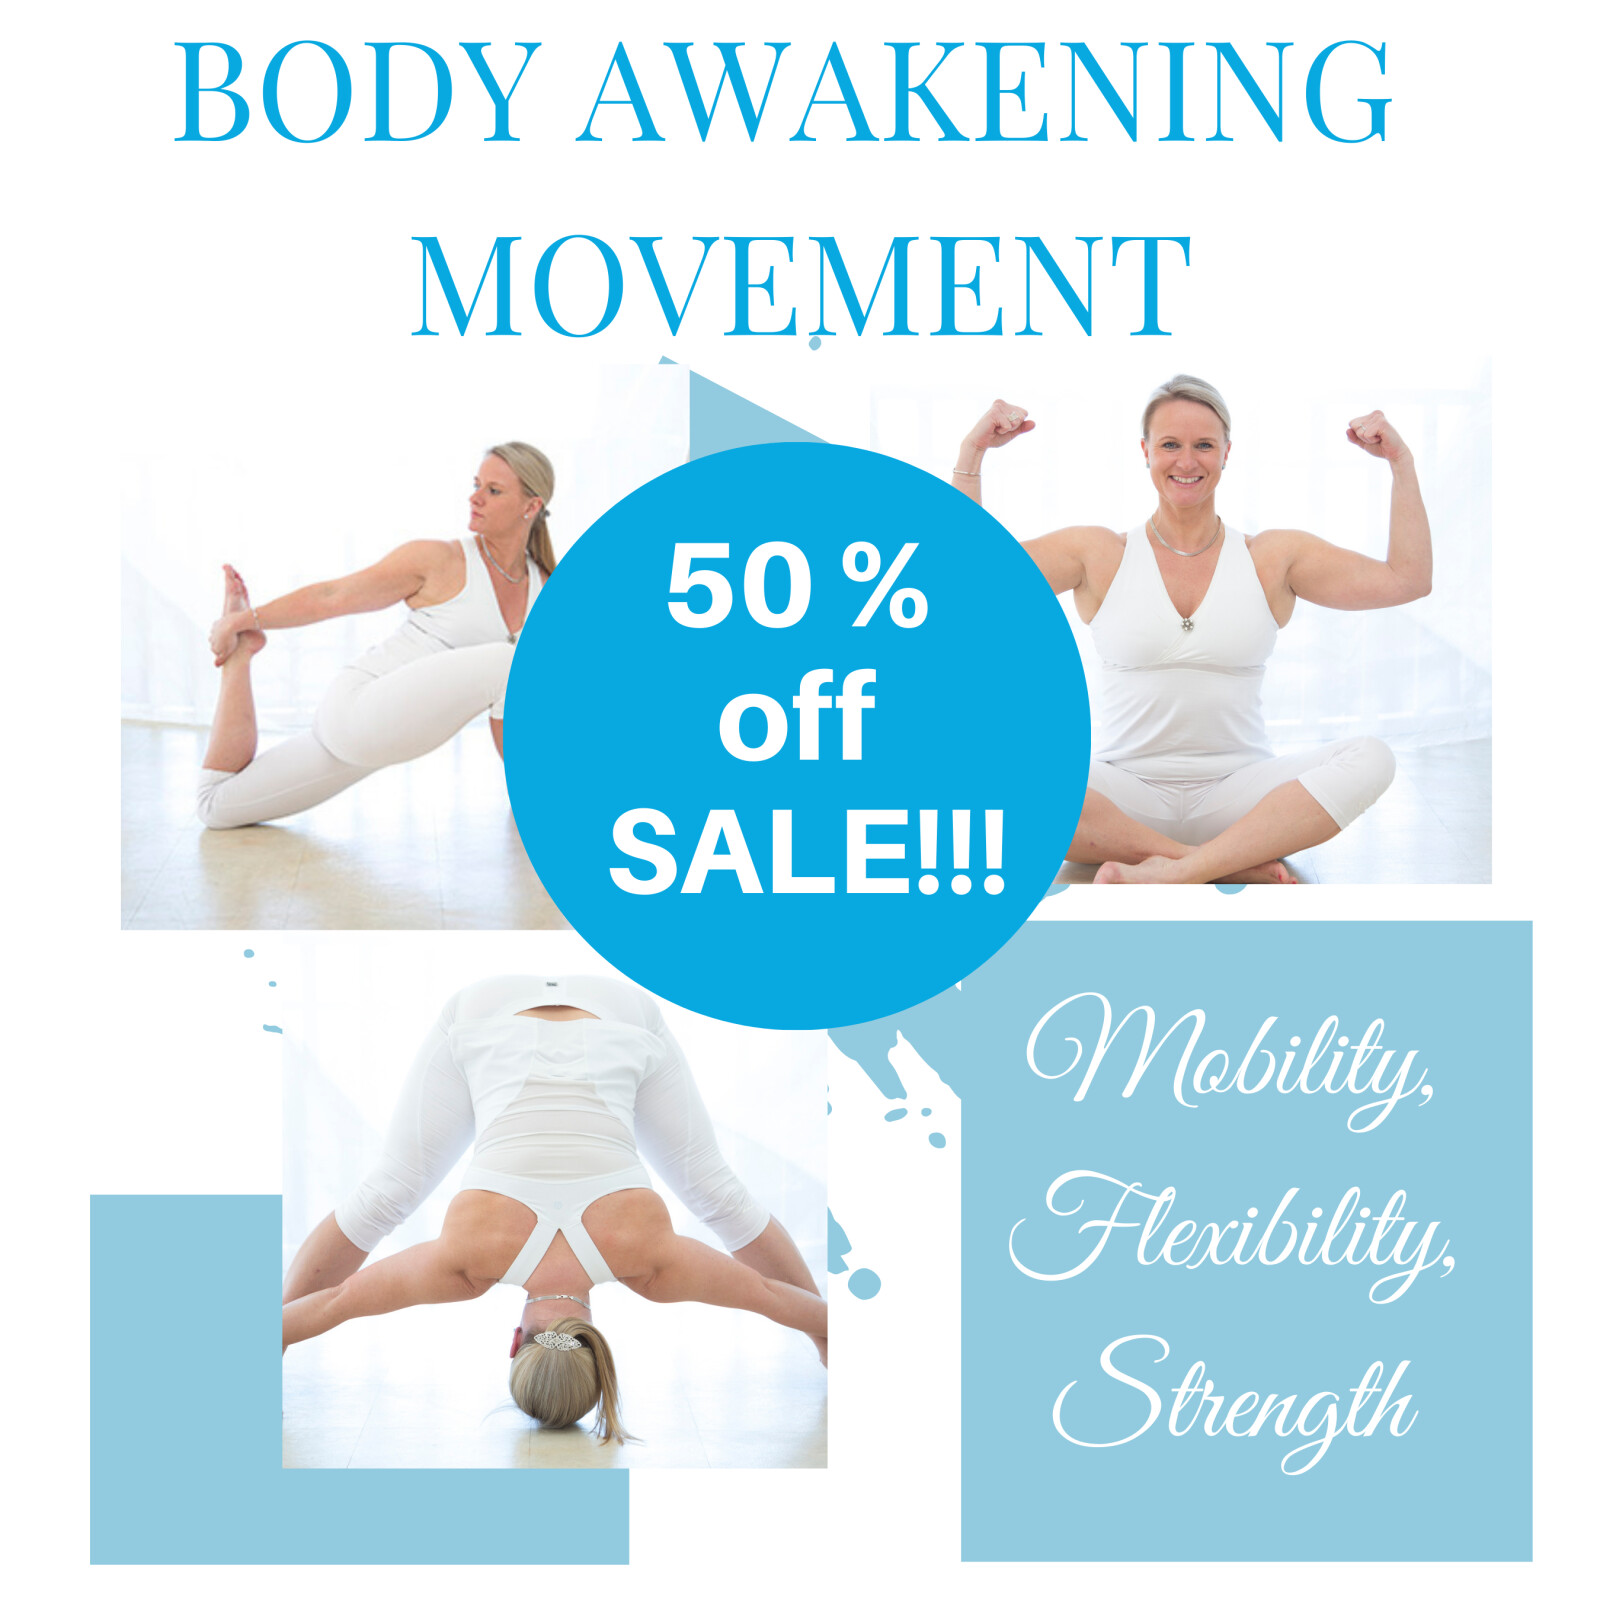 Let's Celebrate  Body Awakening Movement!